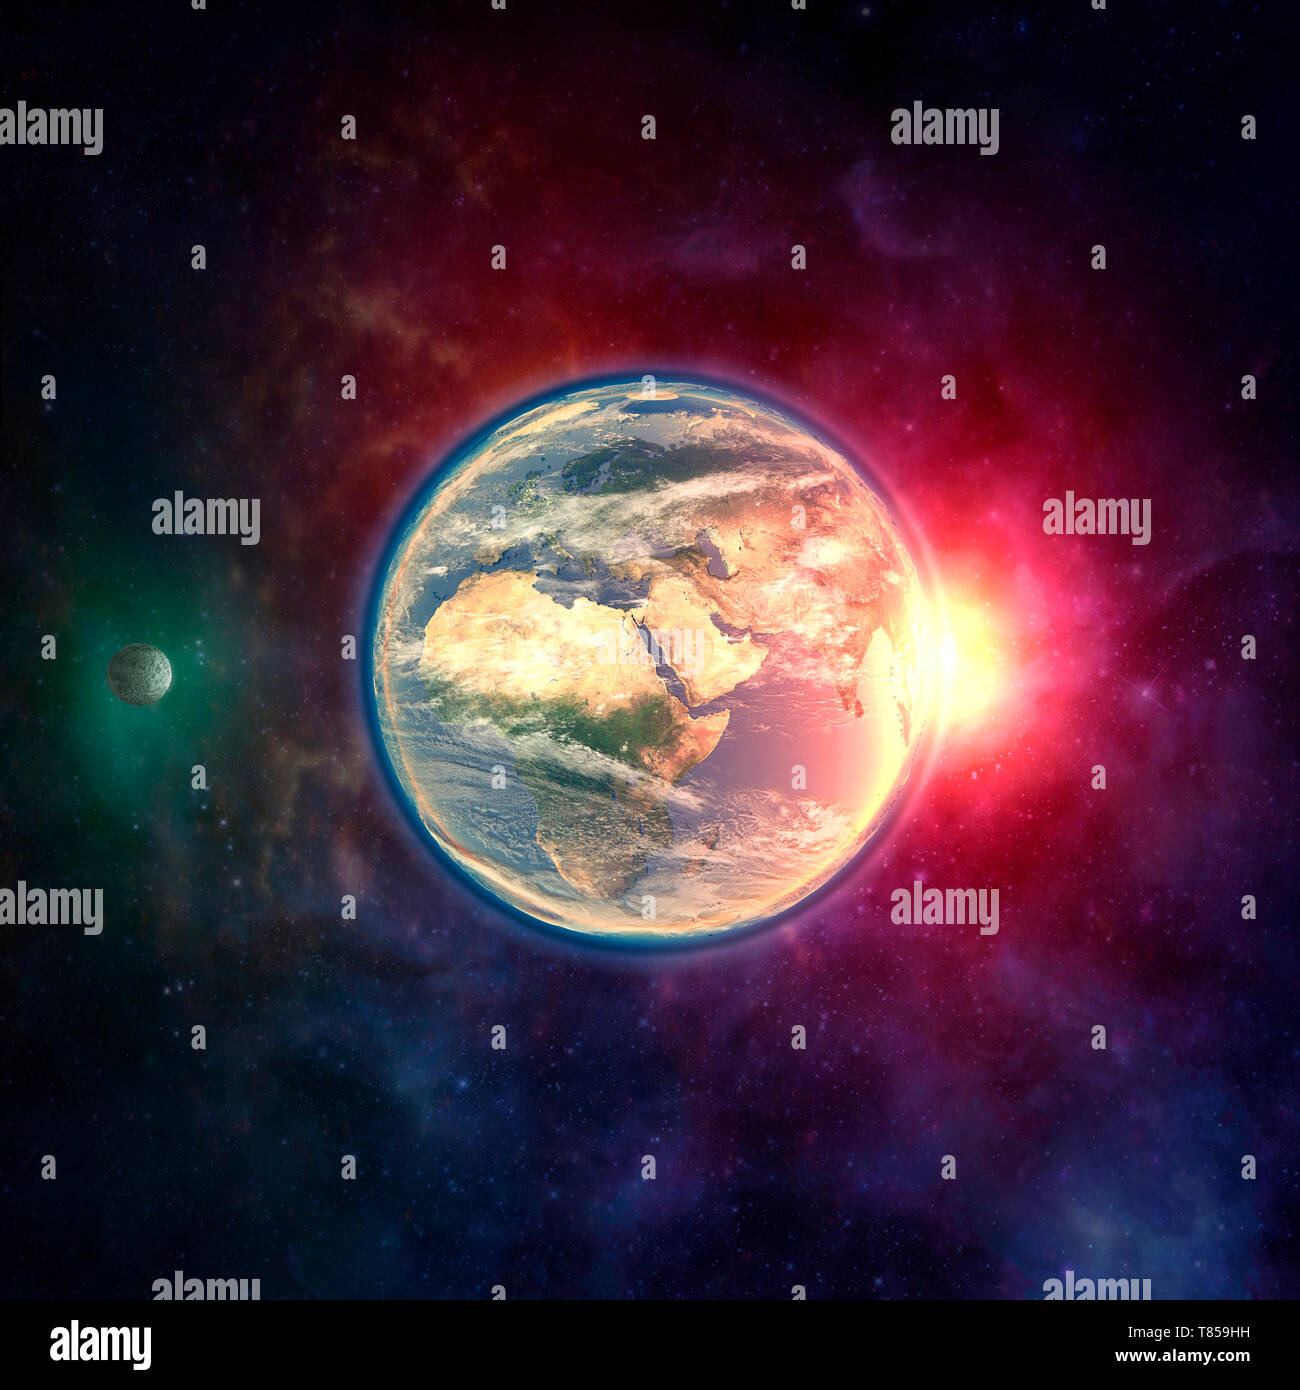 Earth, illustration Stock Photo